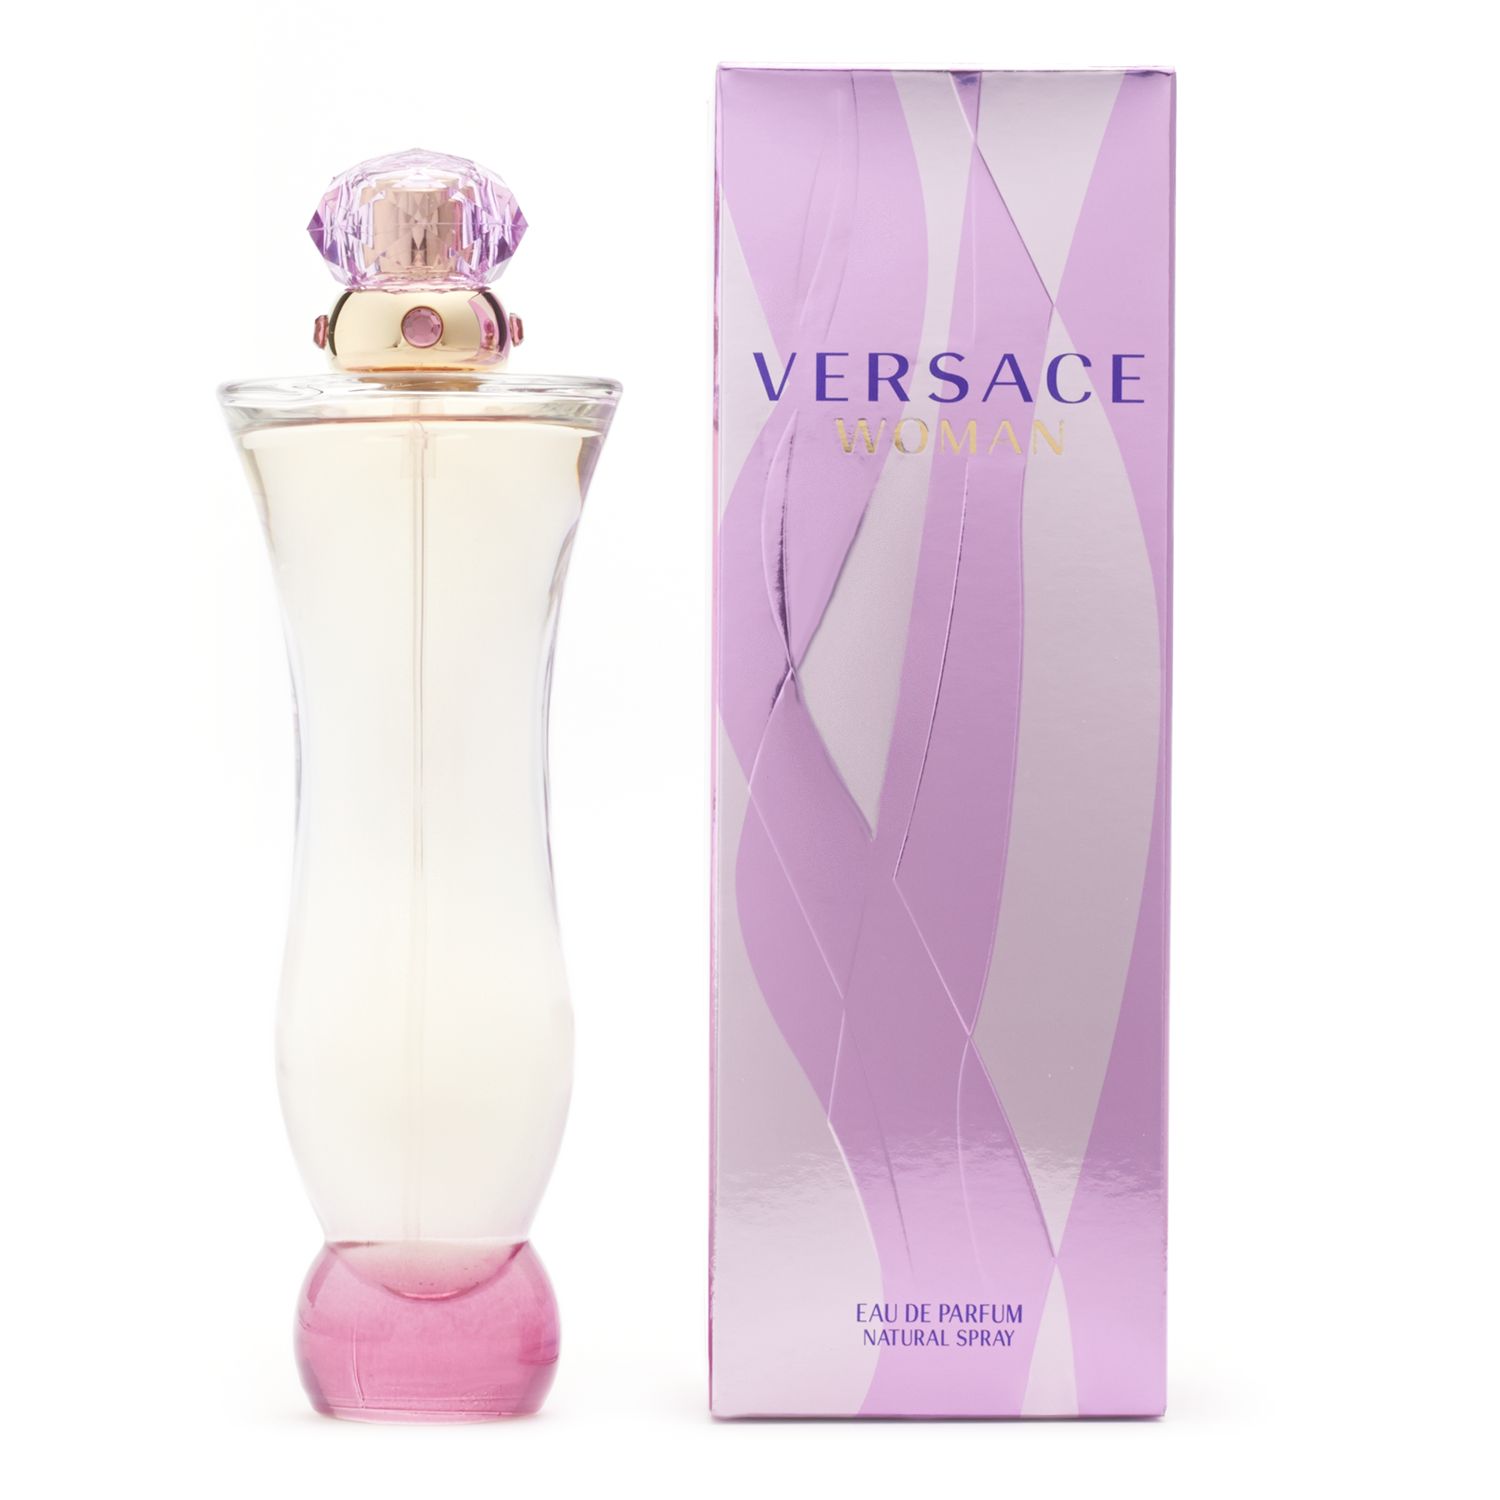 versace woman perfume shop